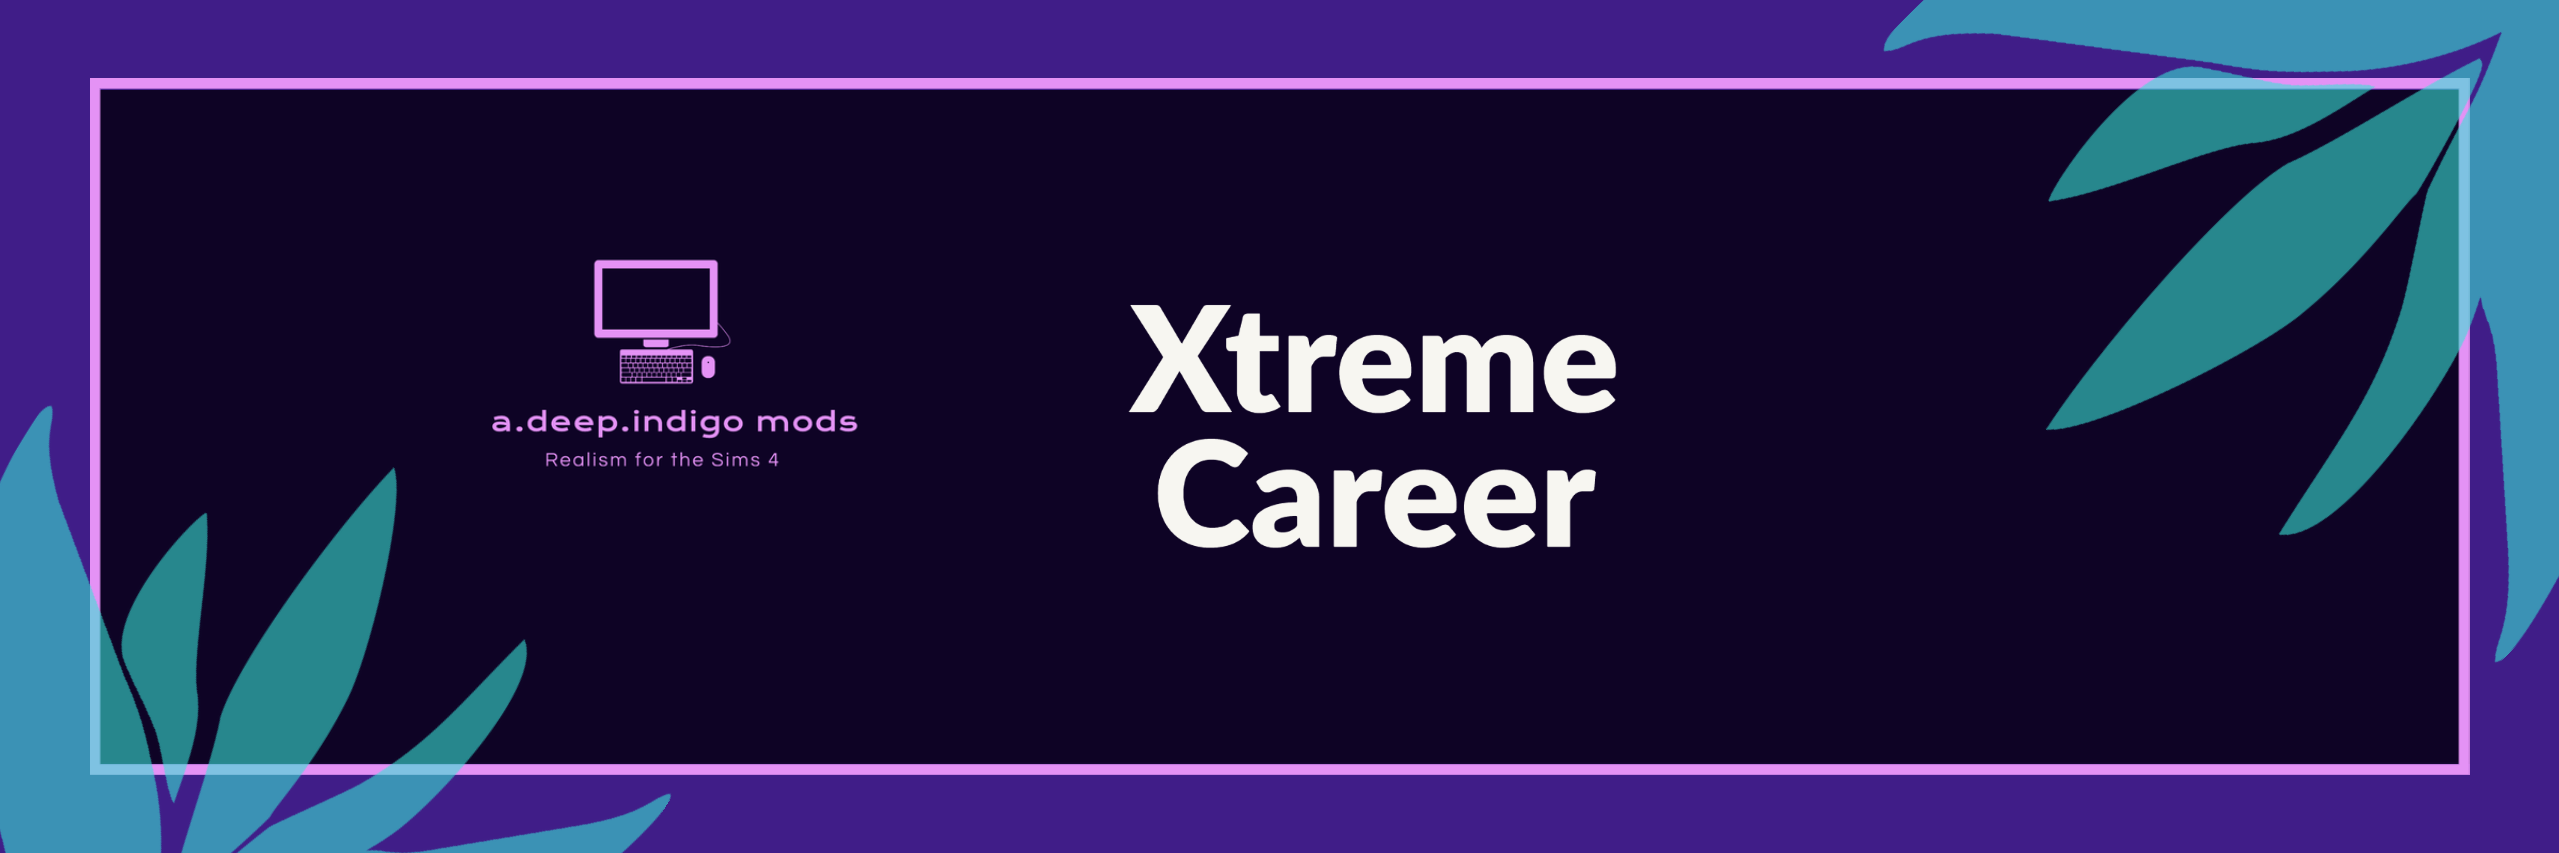 Xtreme Career